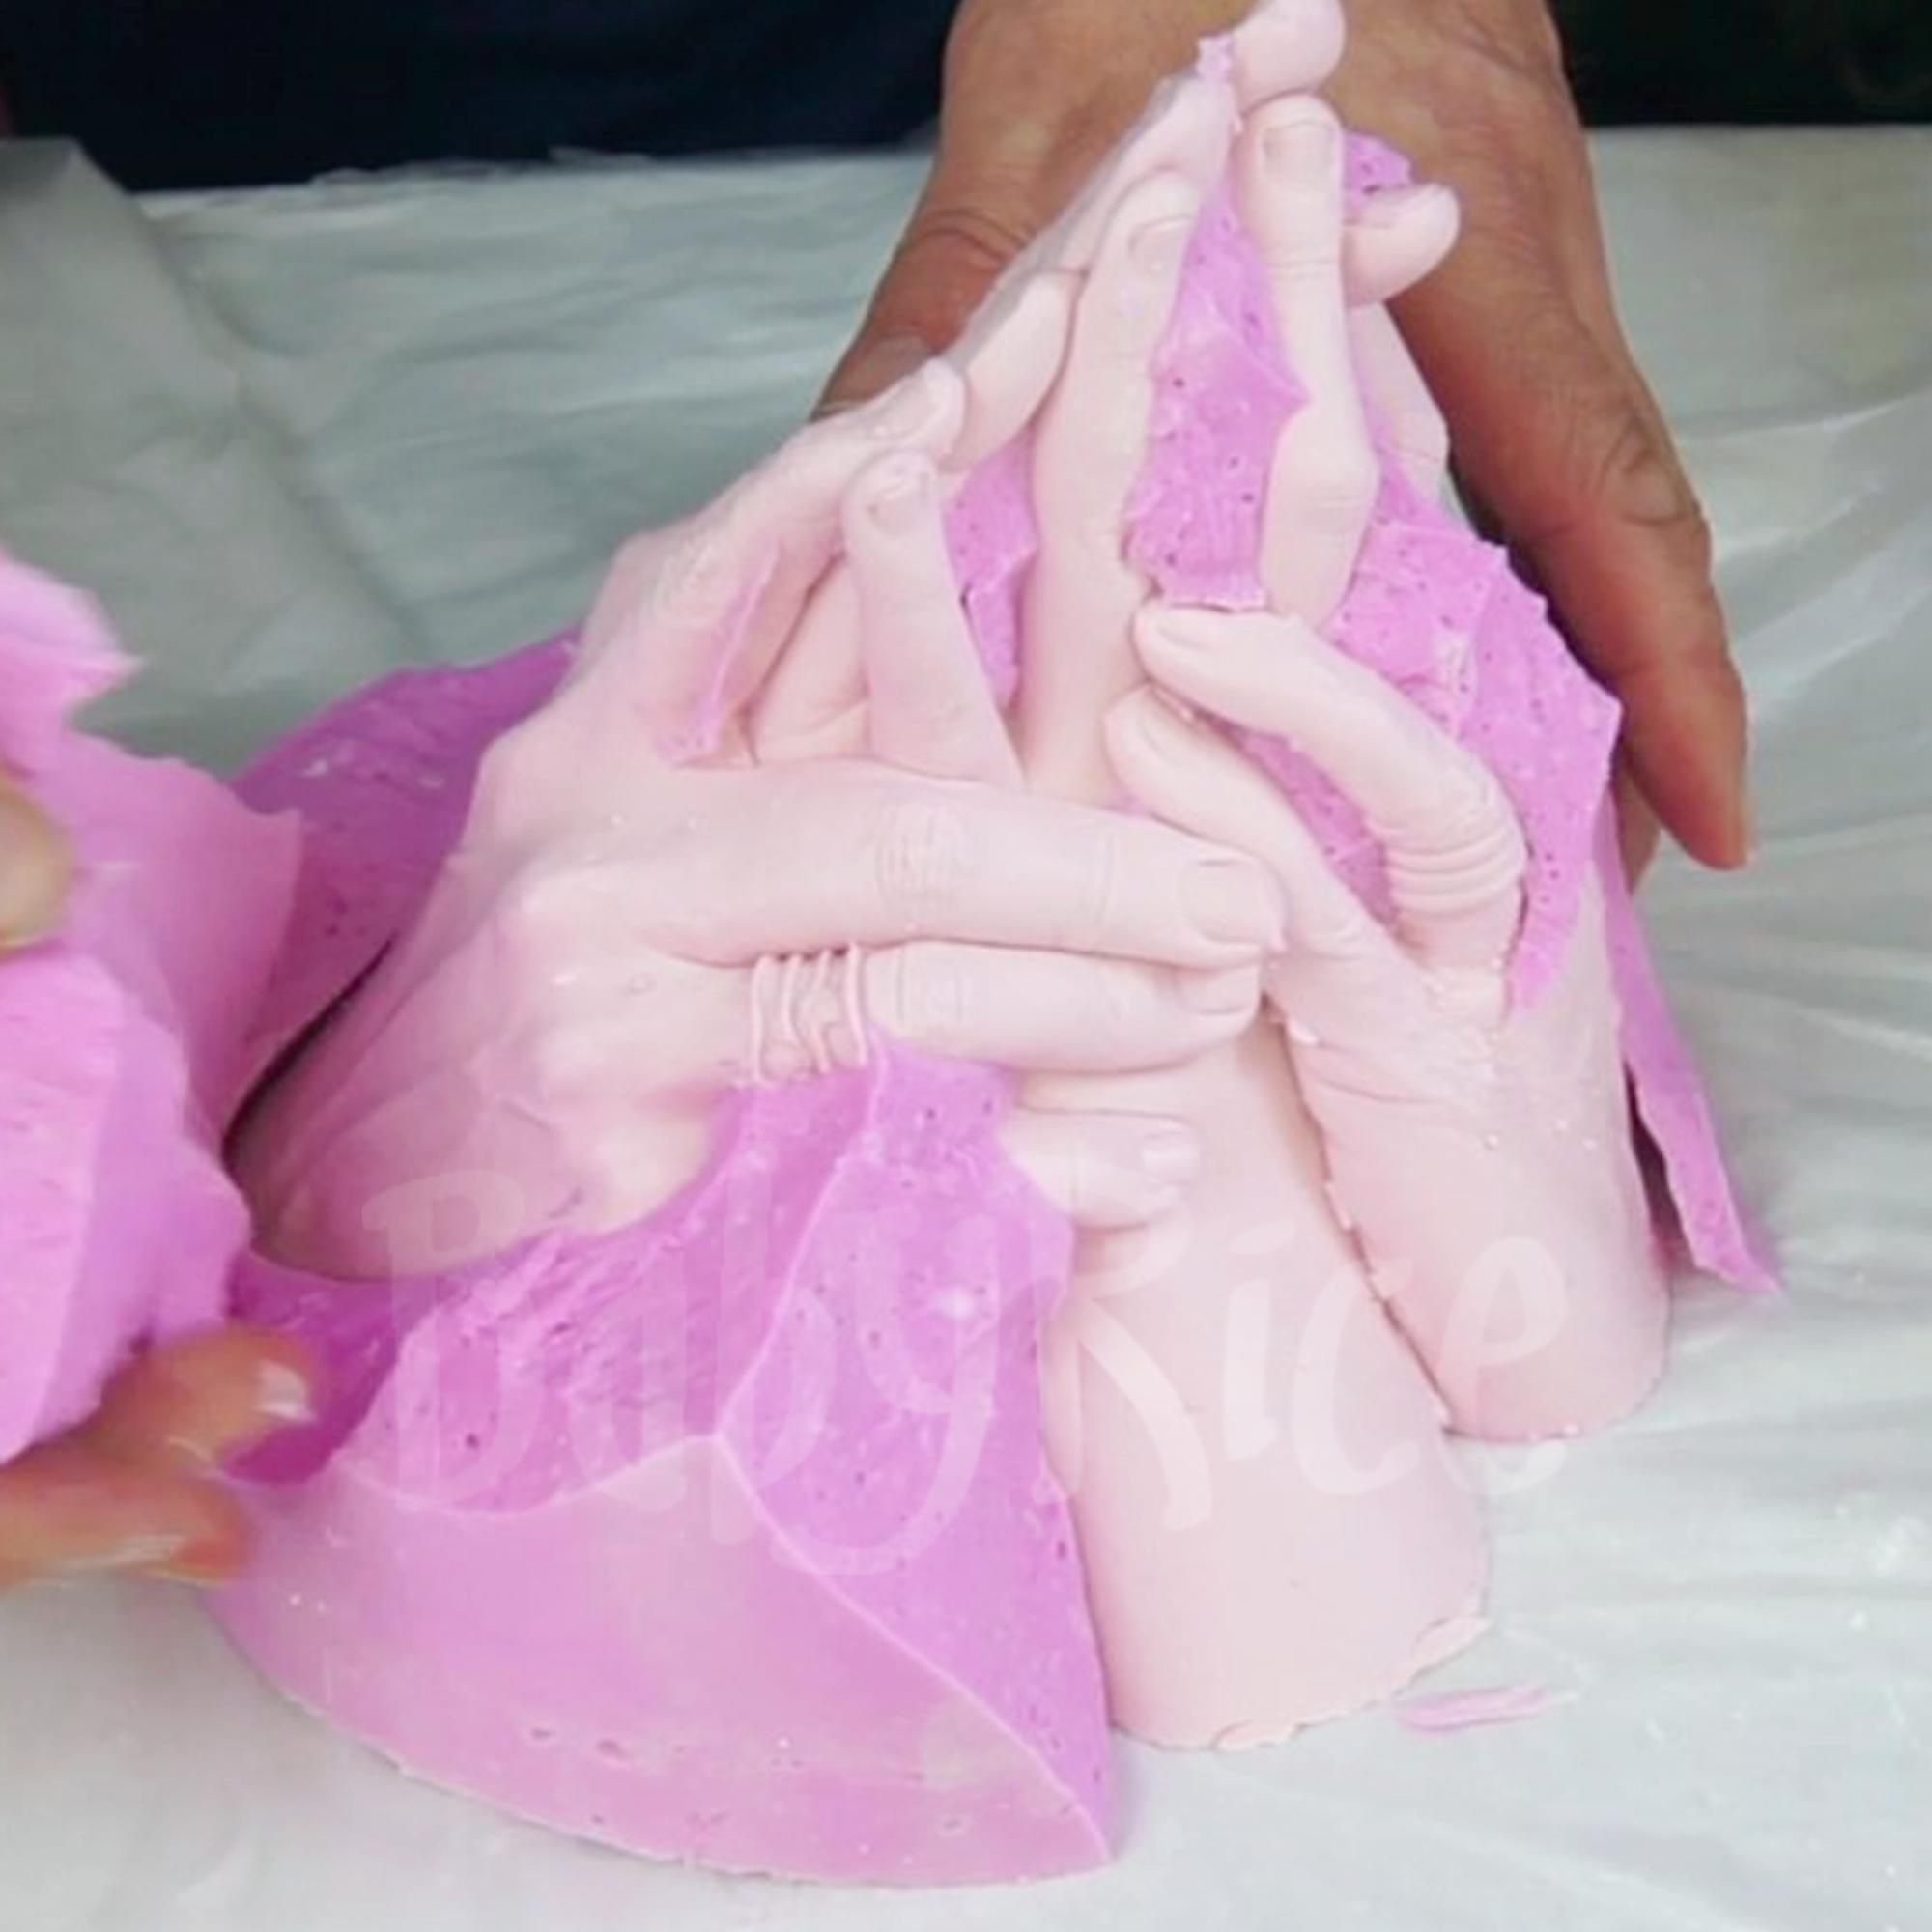 Break away alginate mould from 3D plaster cast